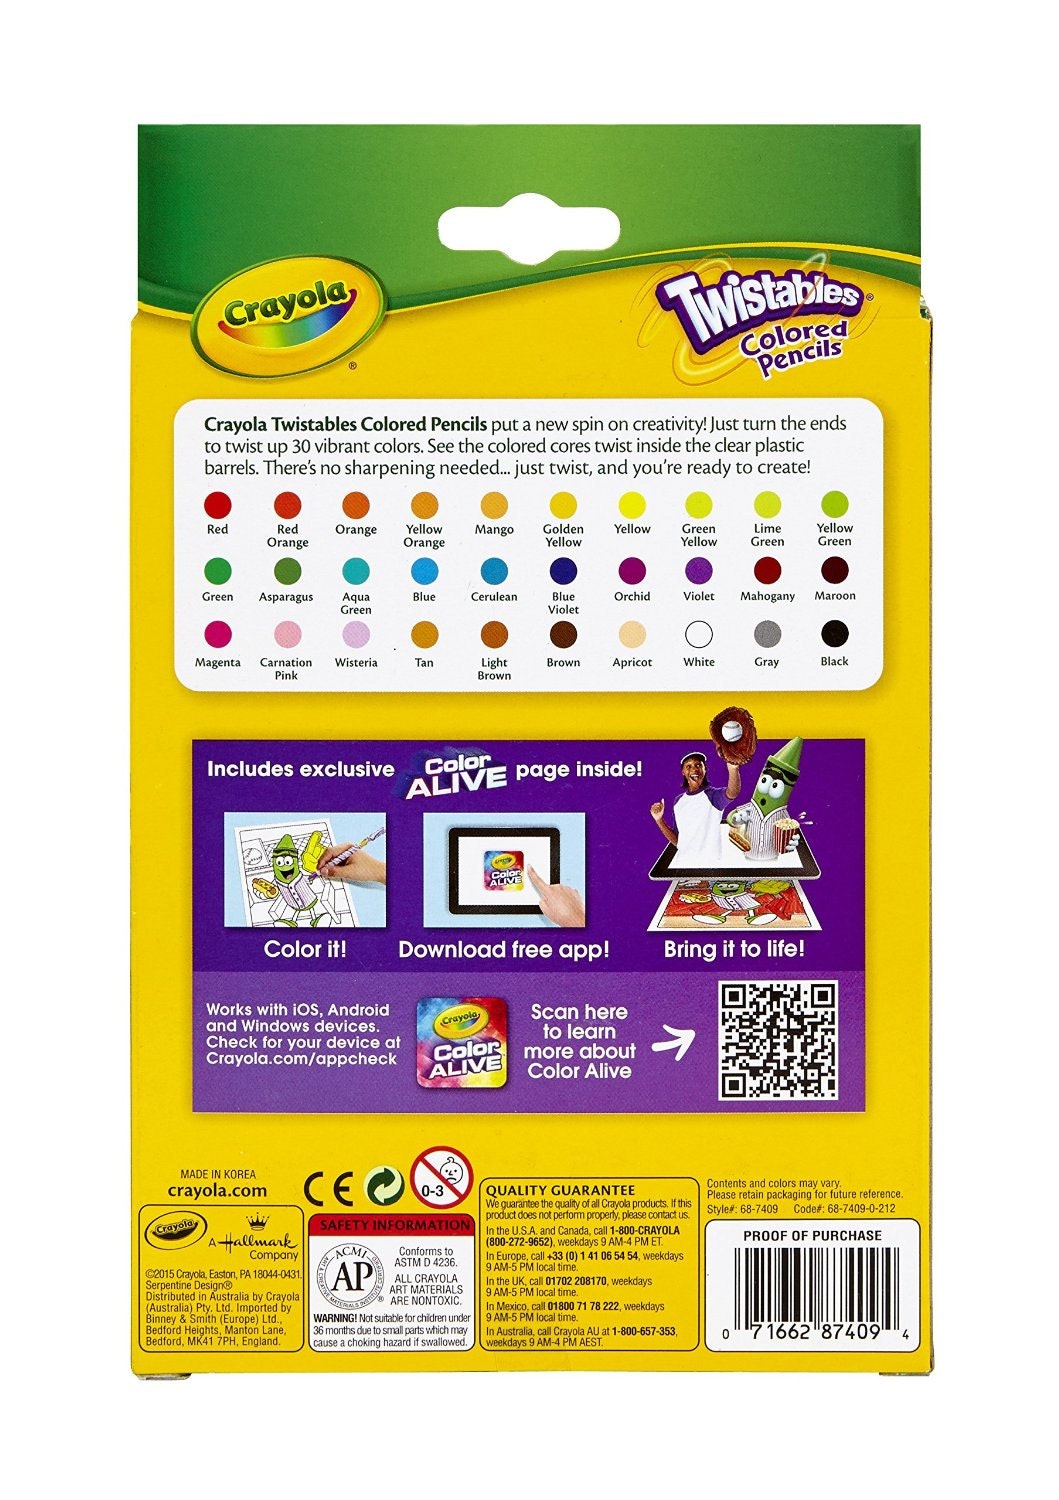 Crayola Color Twist Bath Bomb Assorted Colors/Styles